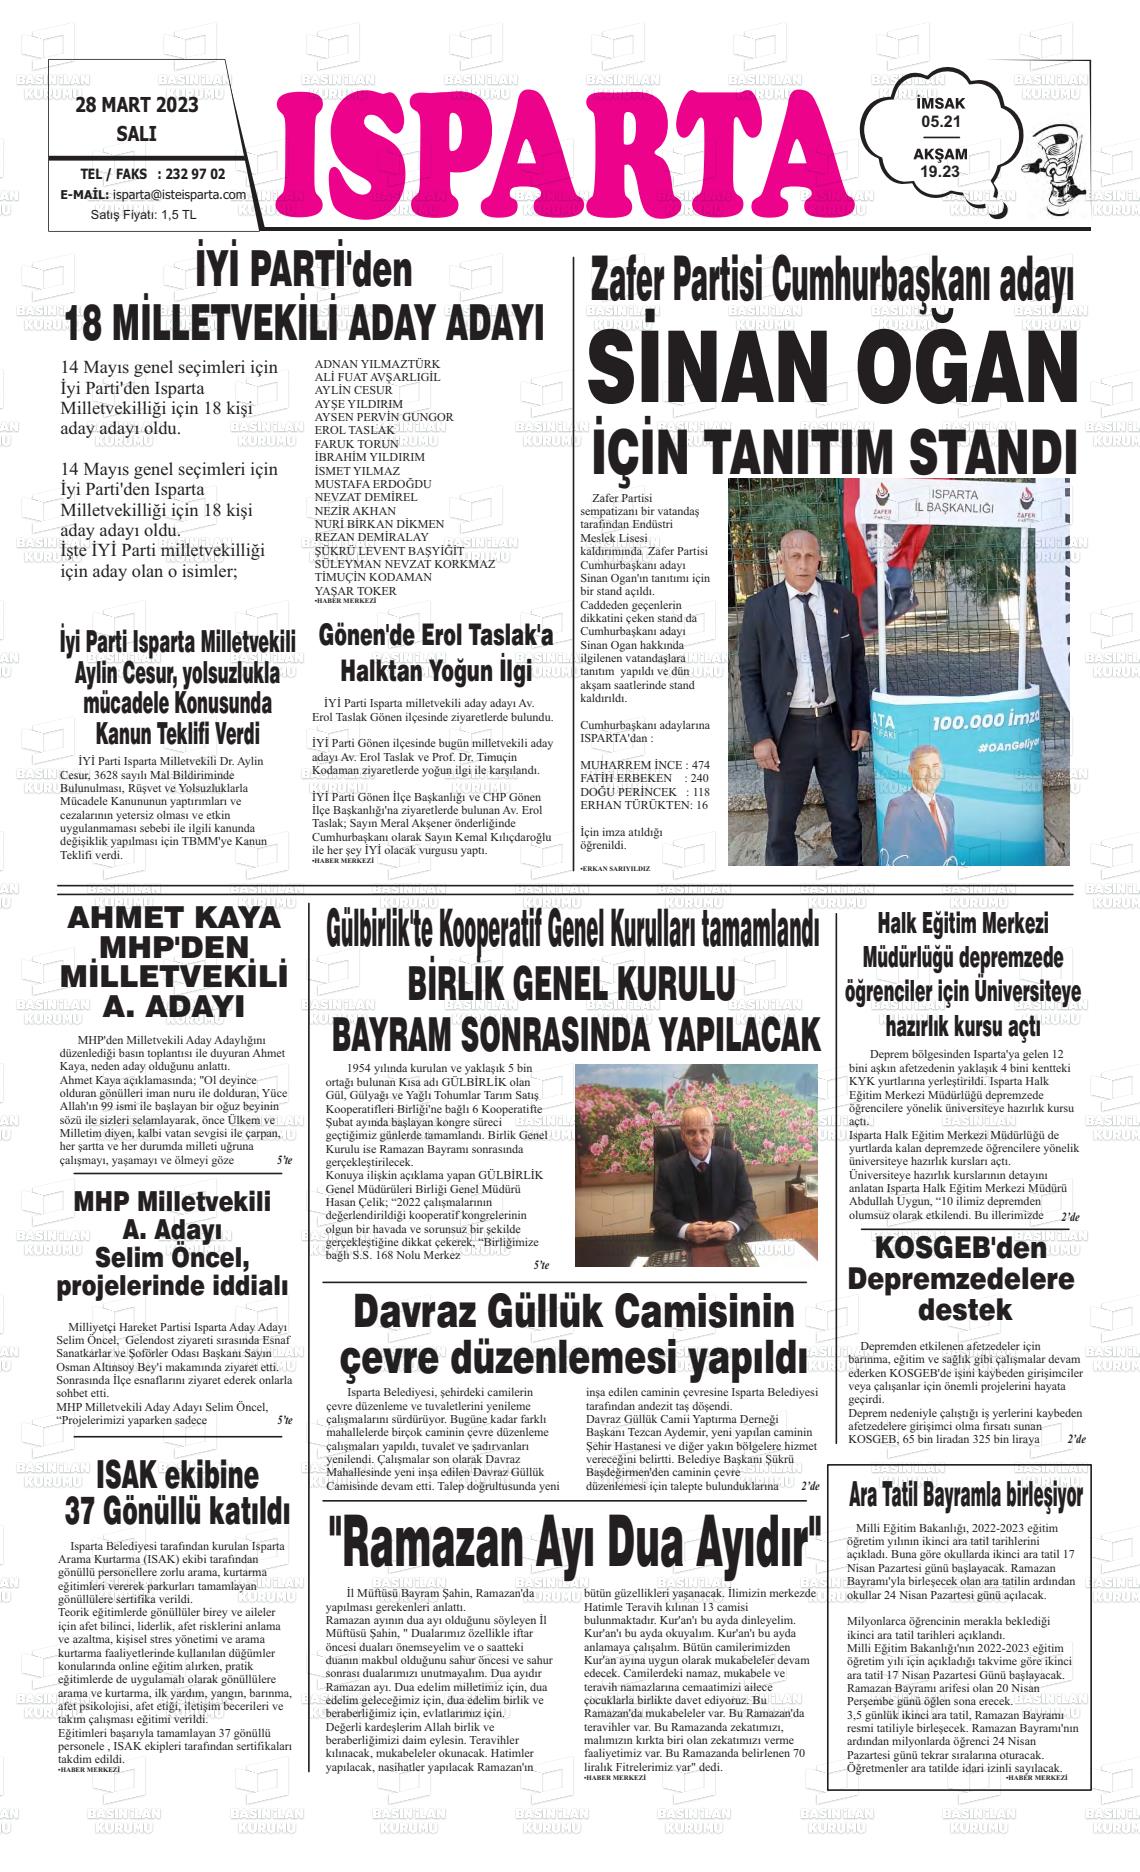 28 Mart 2023 Isparta Gazete Manşeti